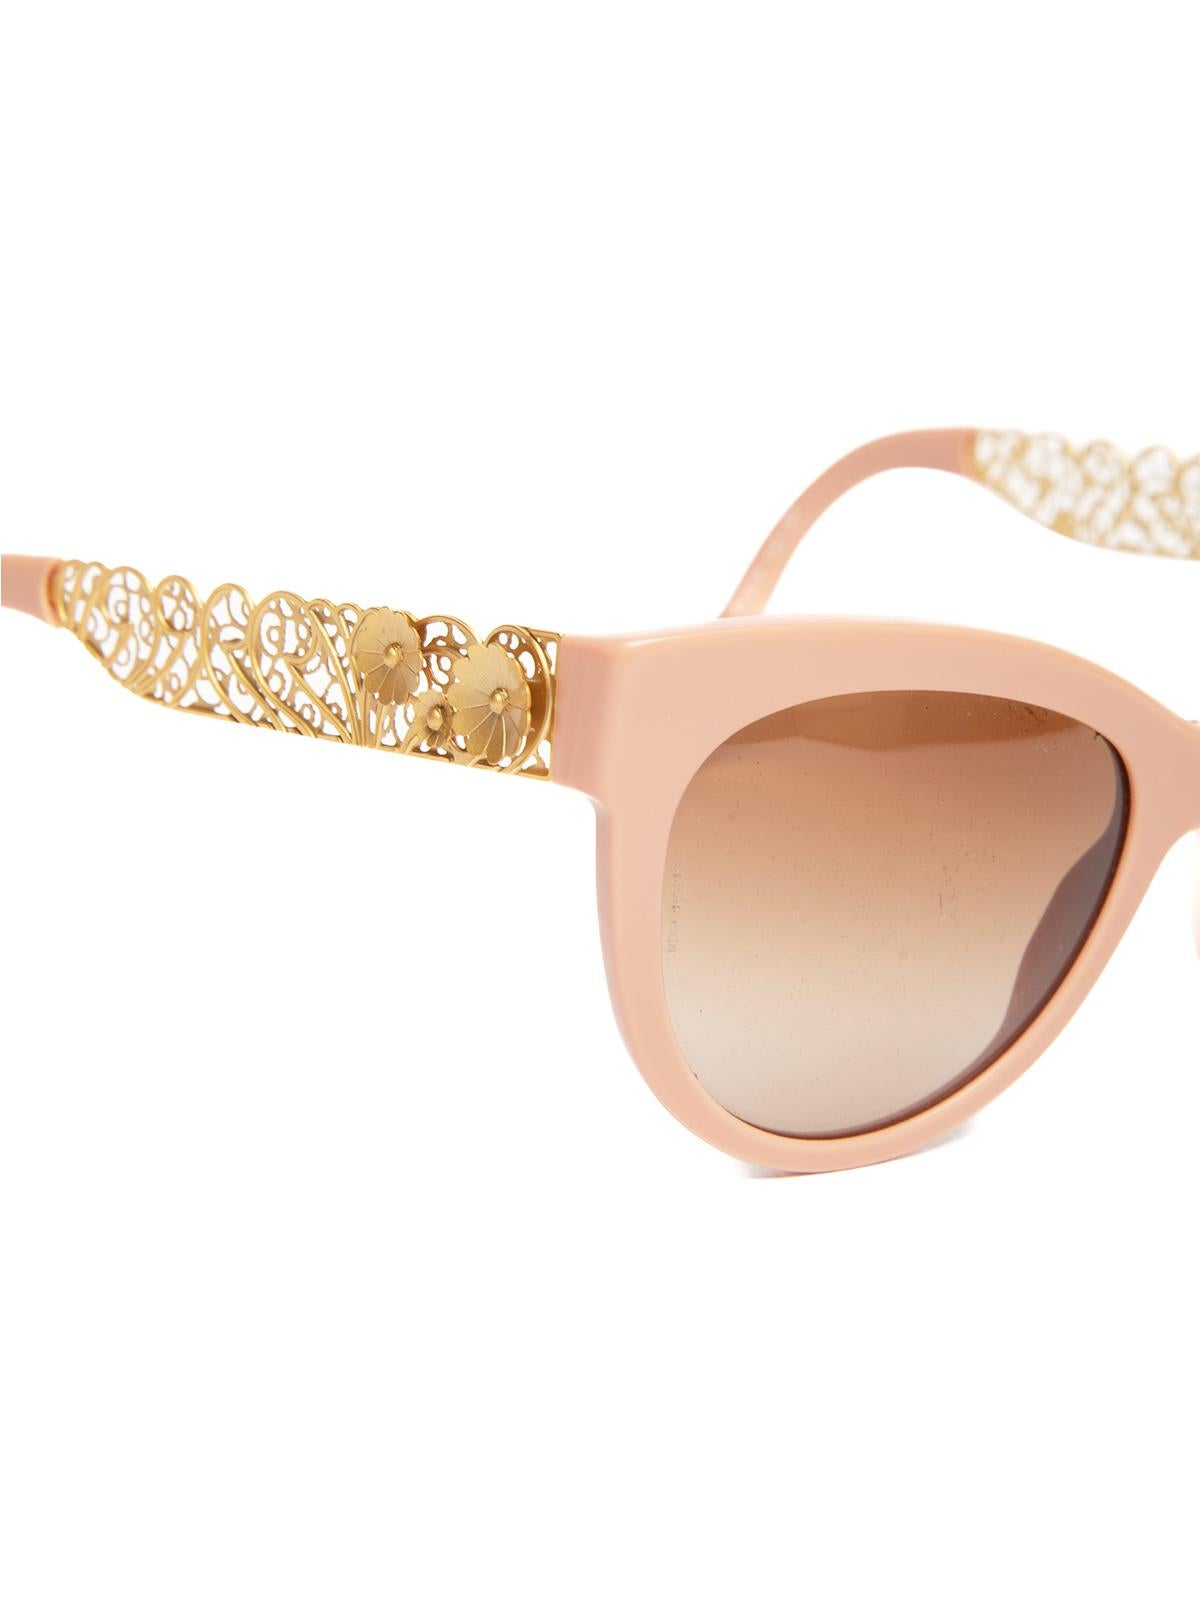 dolce gabbana sunglasses pink